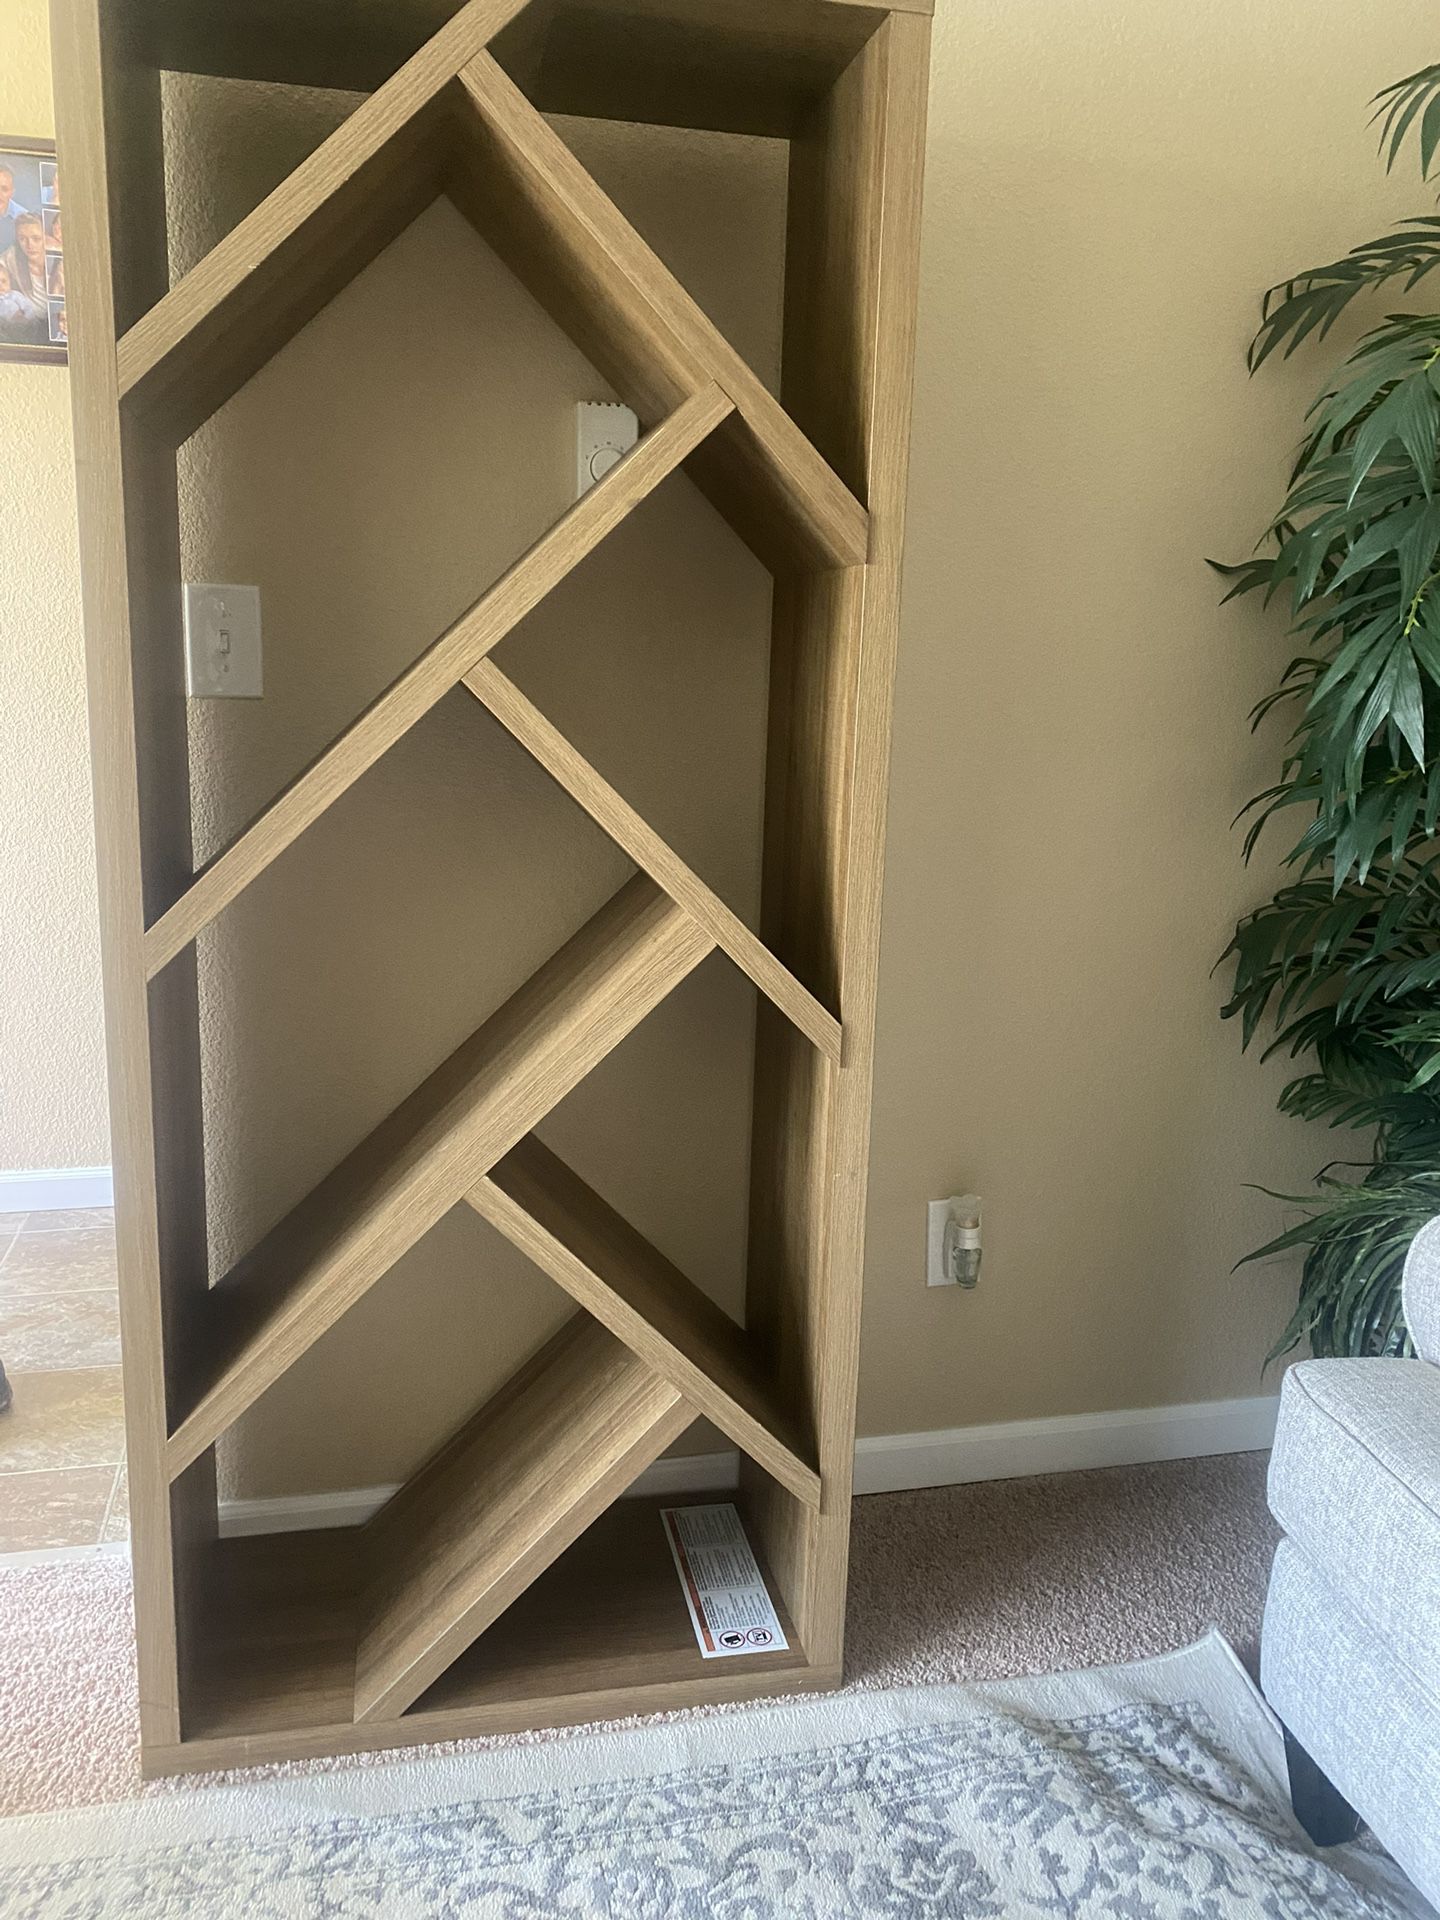 Tv Stand / Book Shelf 